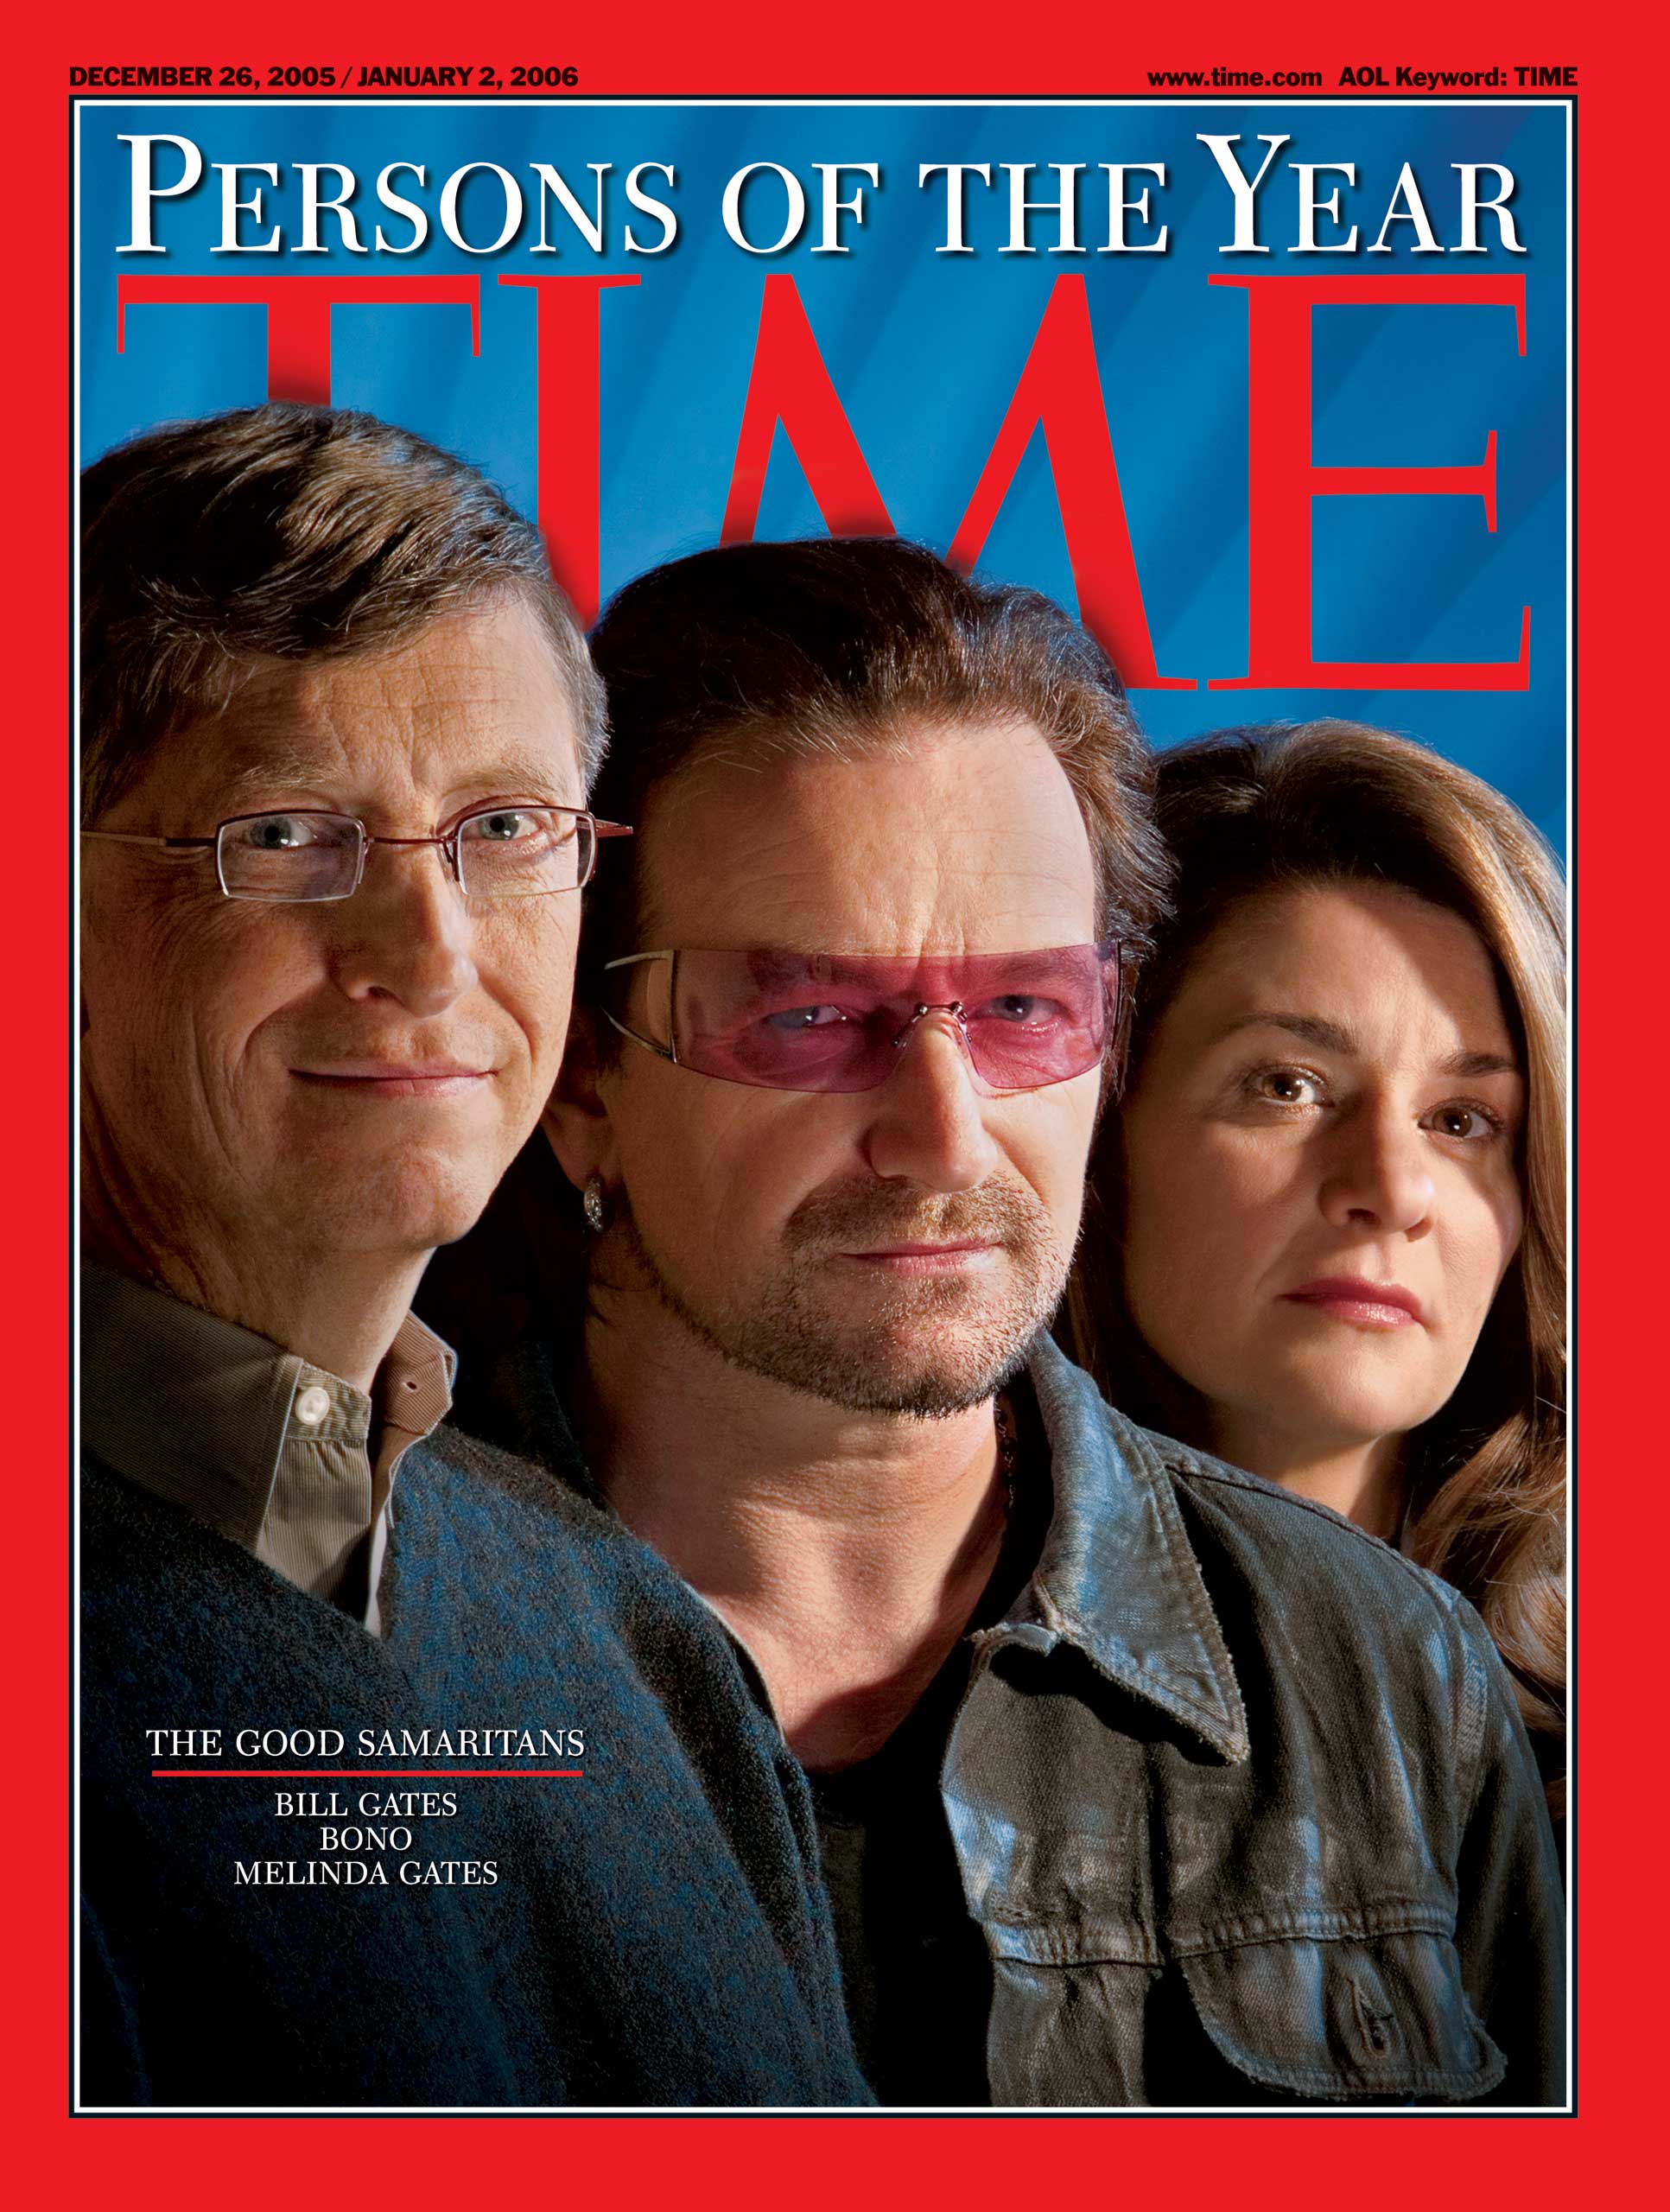 TIME person of the year 2005: The Good Samaritans: Bill Gates, Bono, Melinda Gates